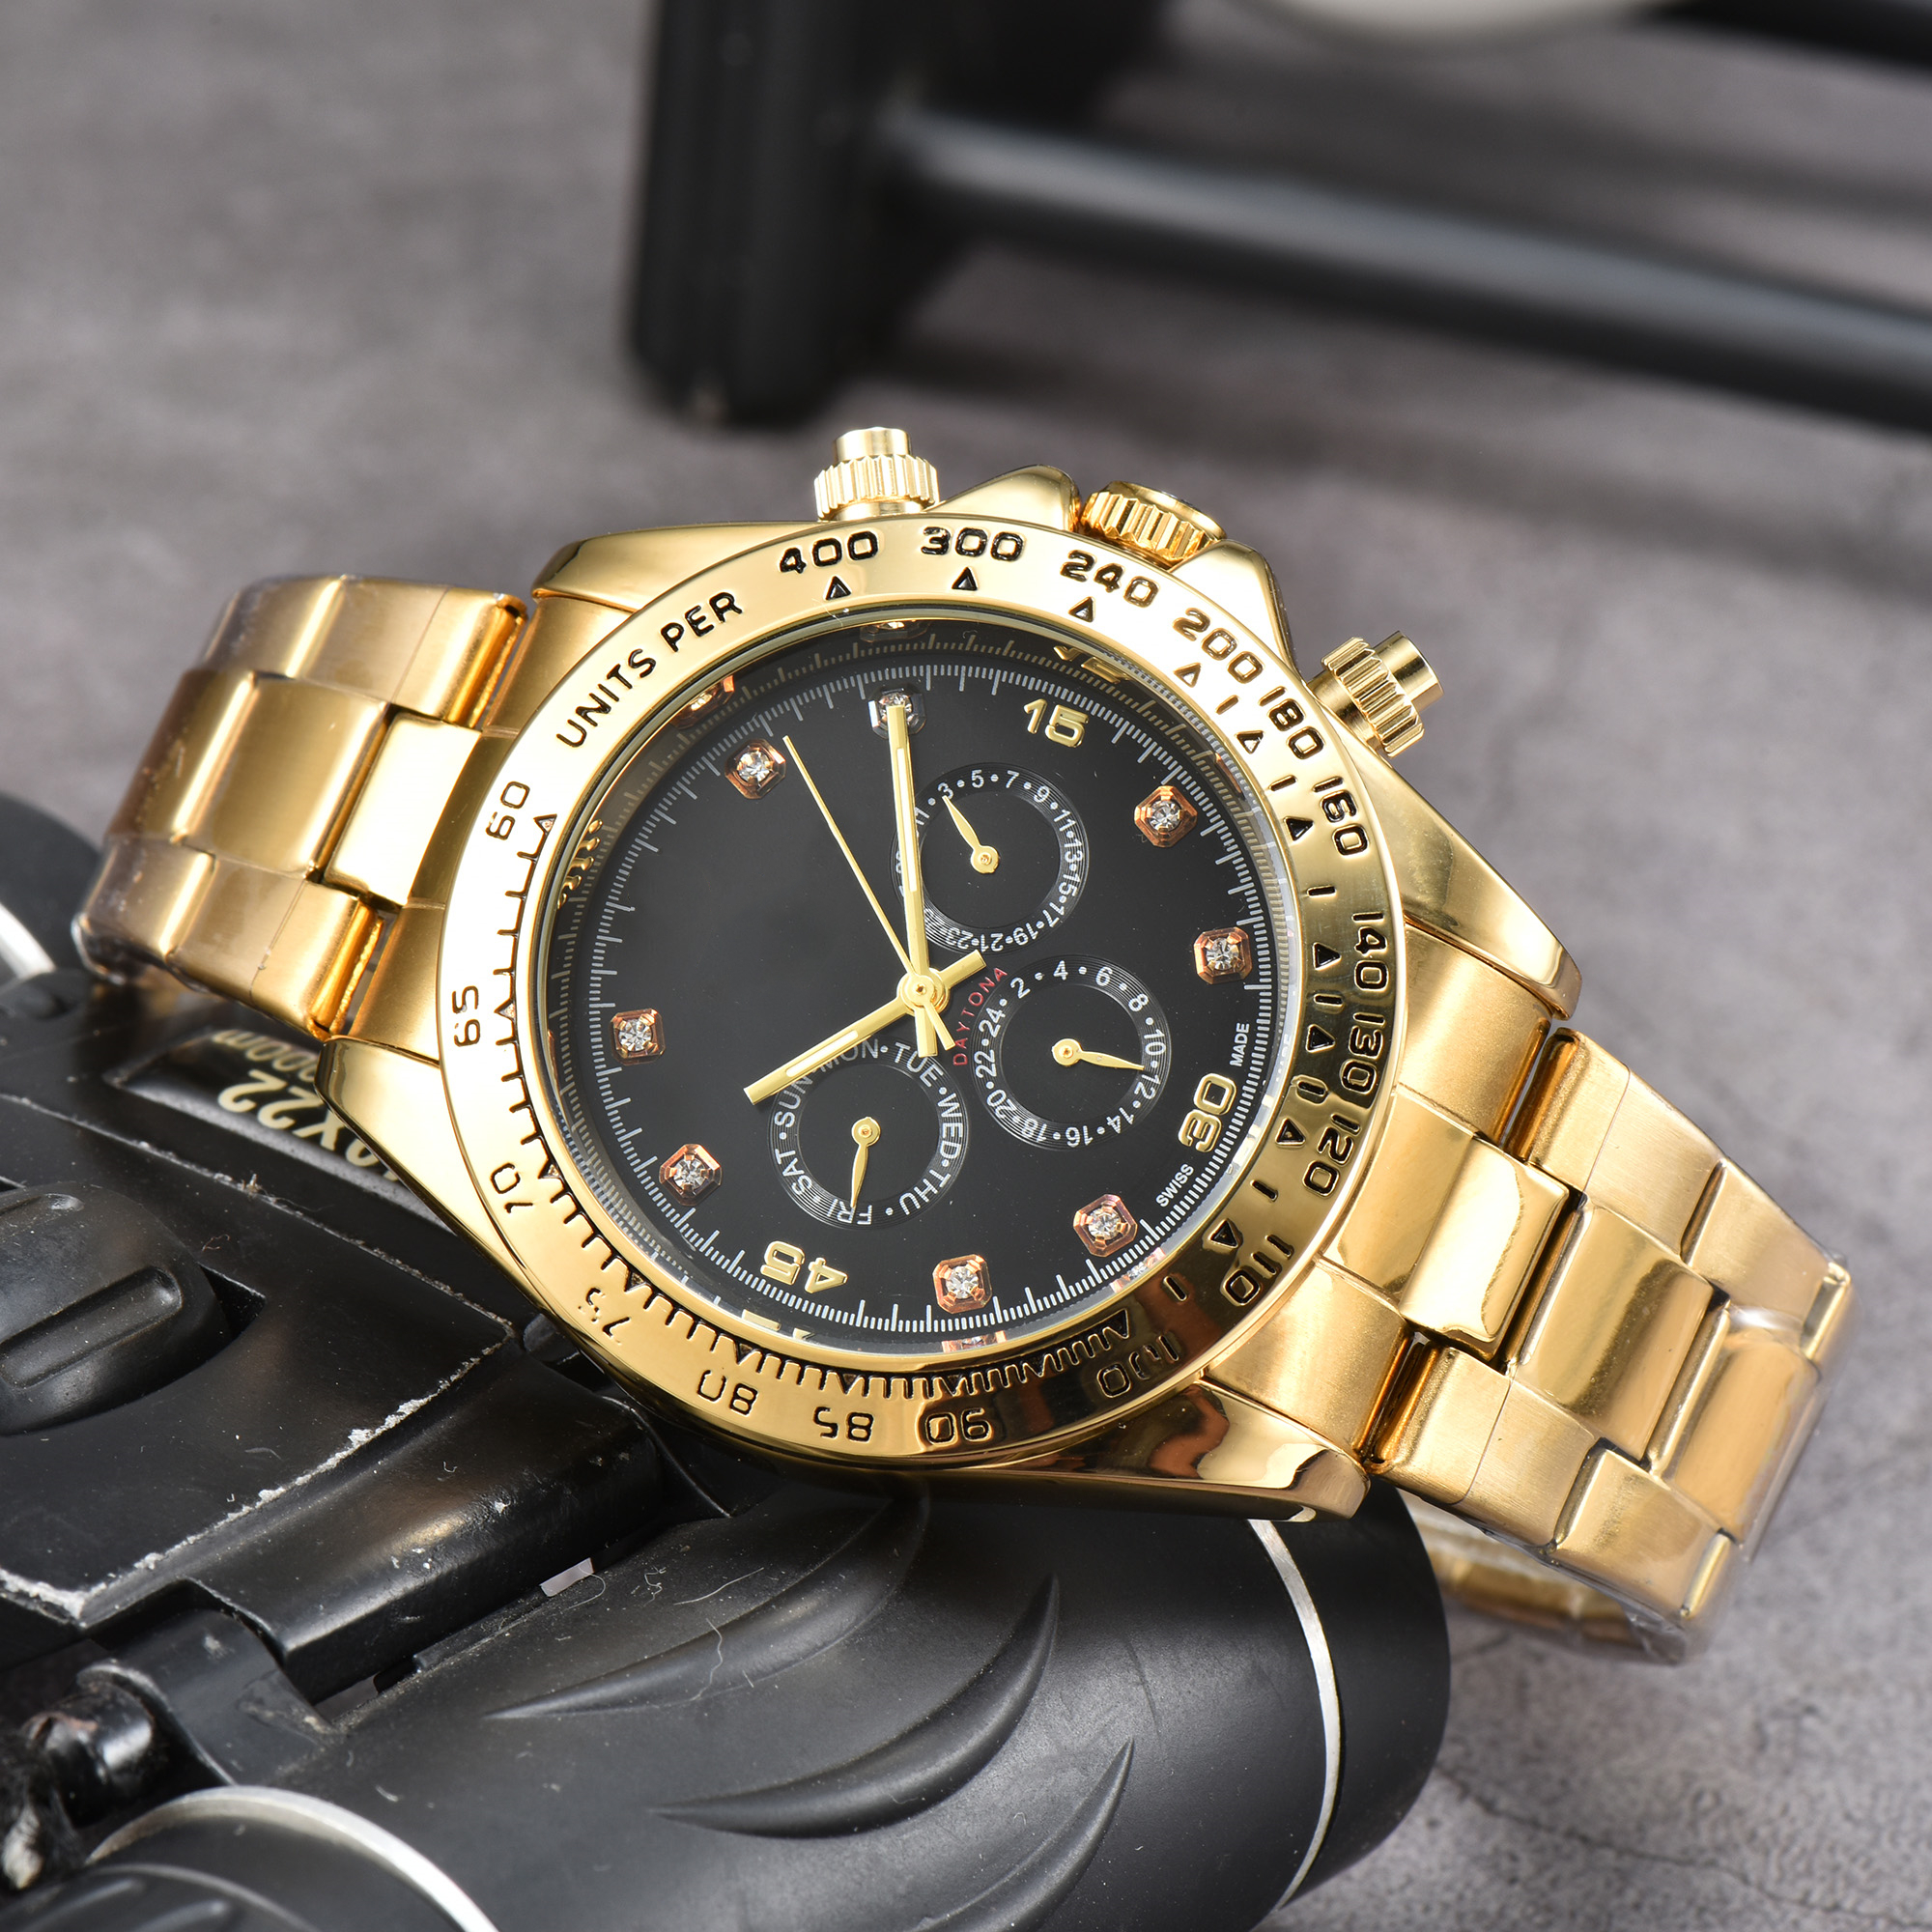 Watch Watch Luxury Men Fashion Classic Style Stafless Steel مقاوم للماء من الياقوت الميكانيكي الميكانيكي Dhgate Watch239V